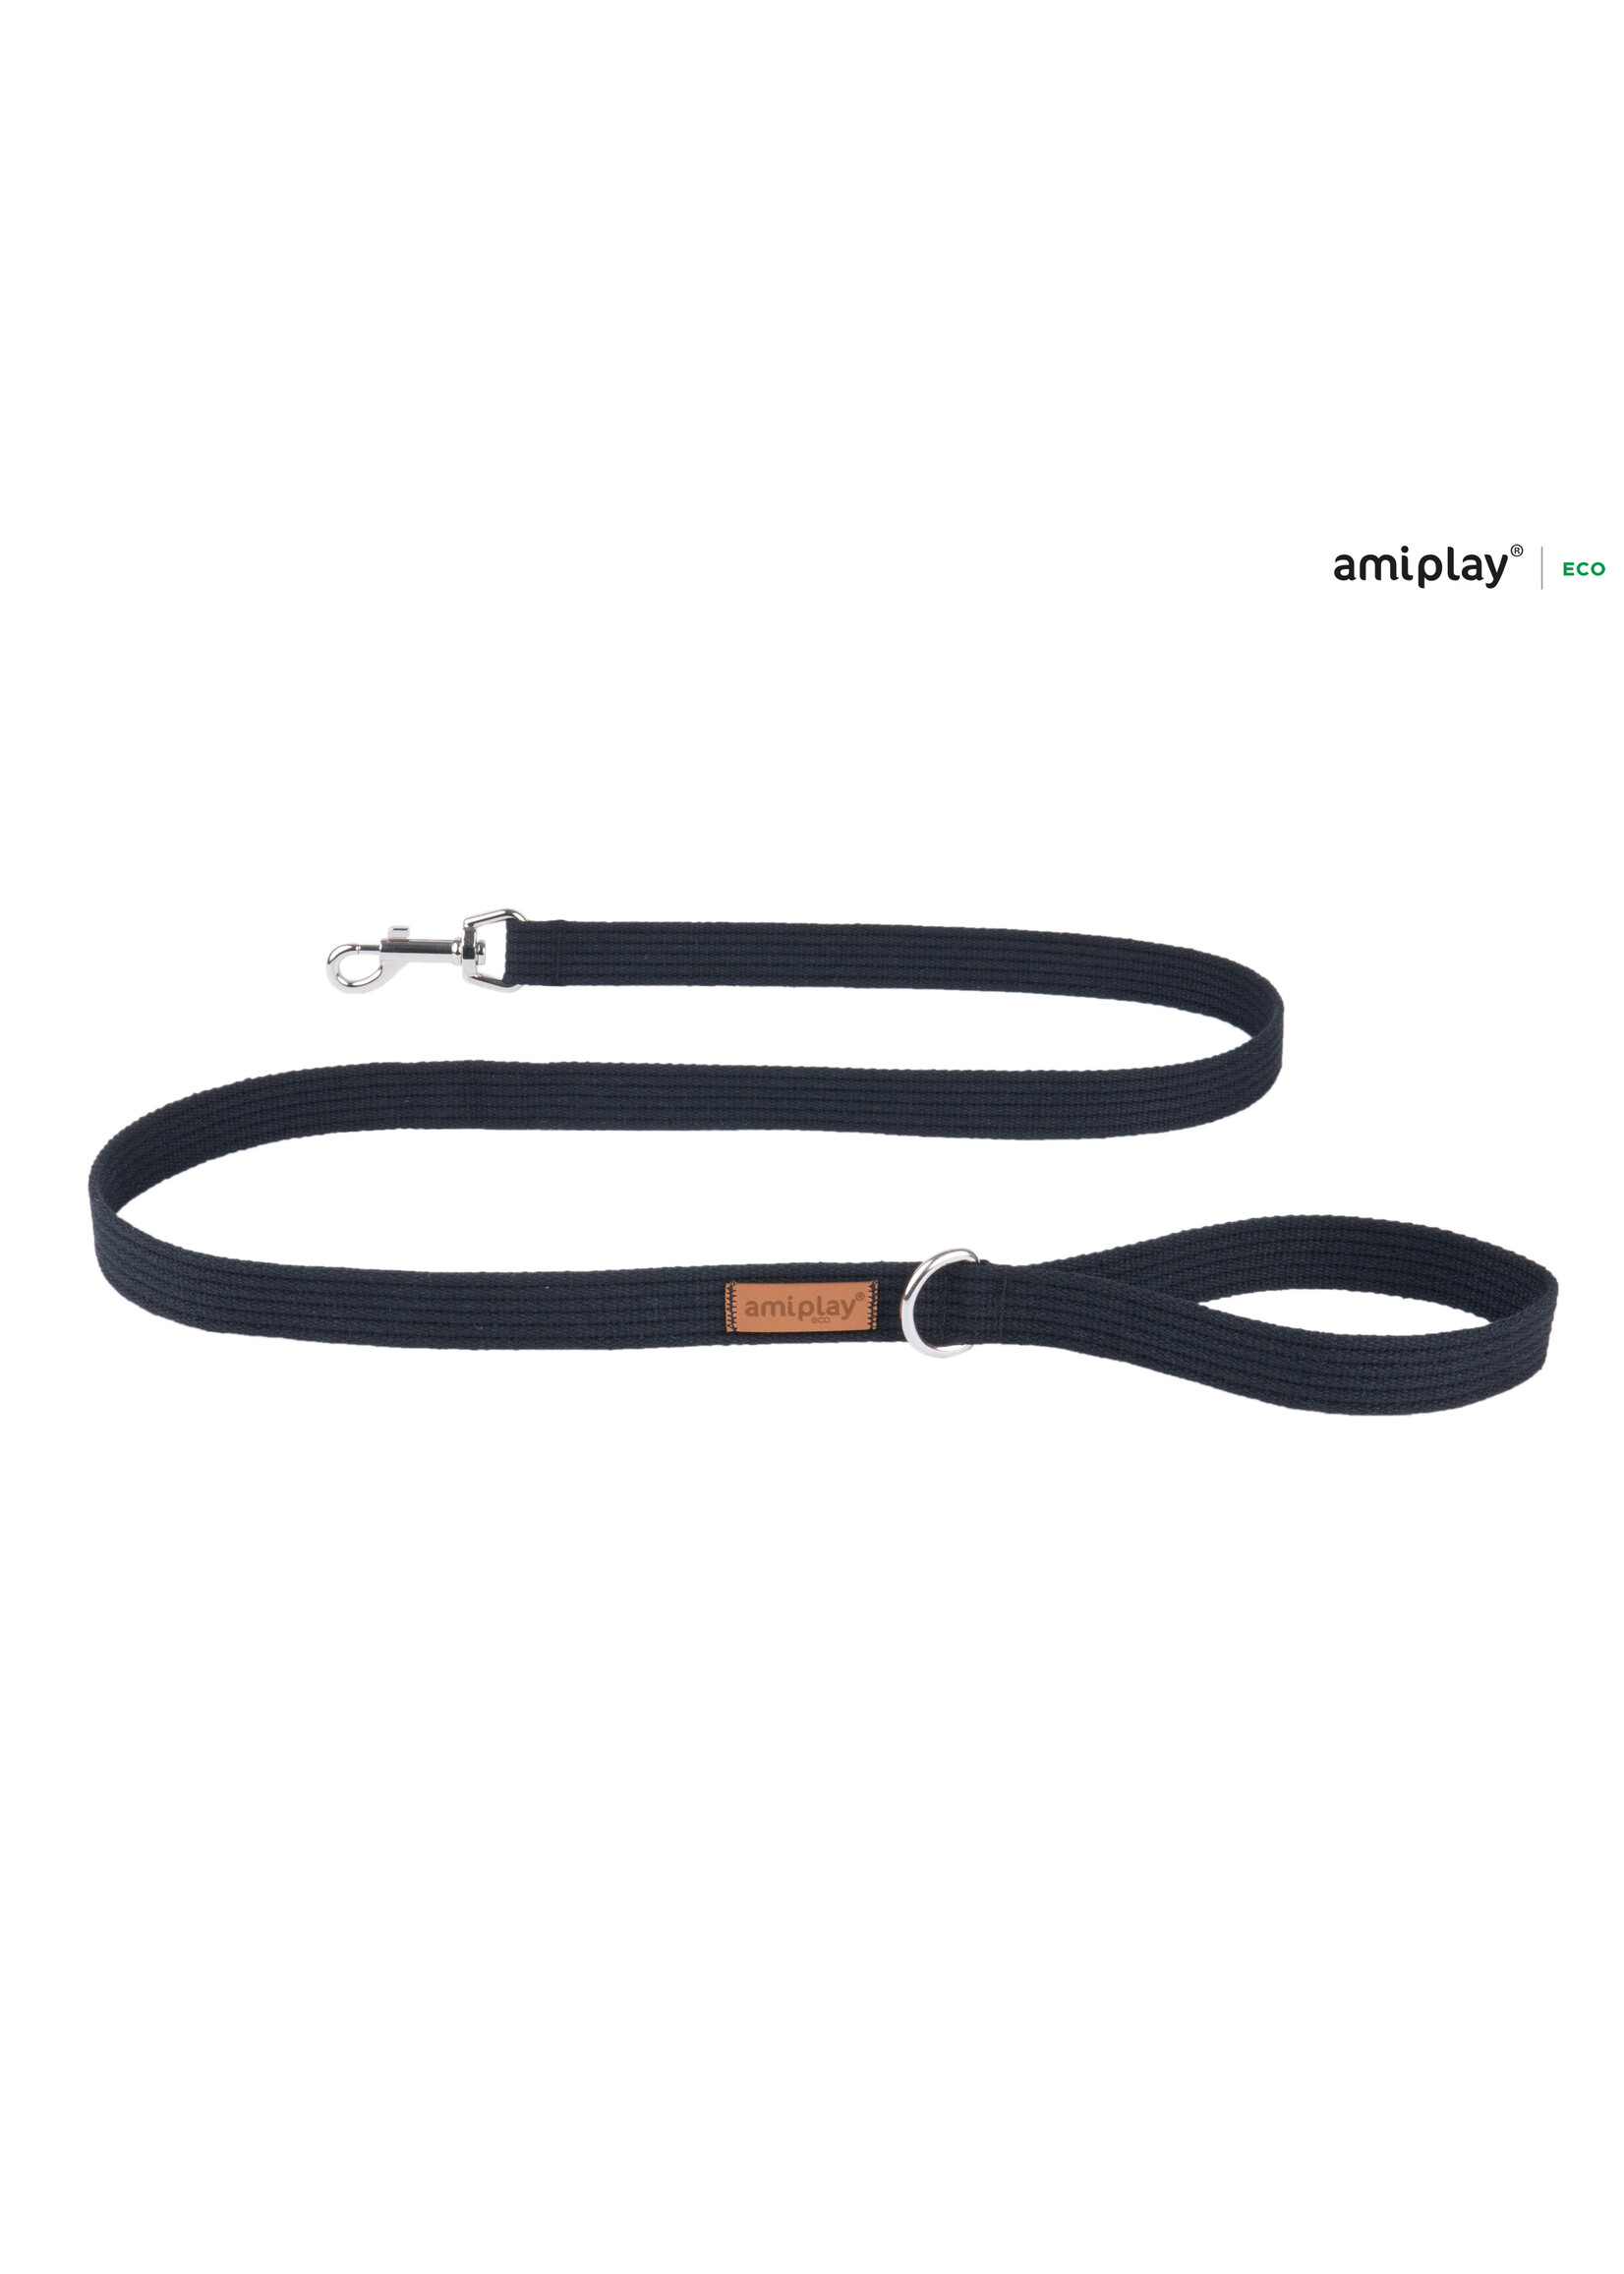 Amiplay Leiband Cotton zwart maat-M / 140x2cm